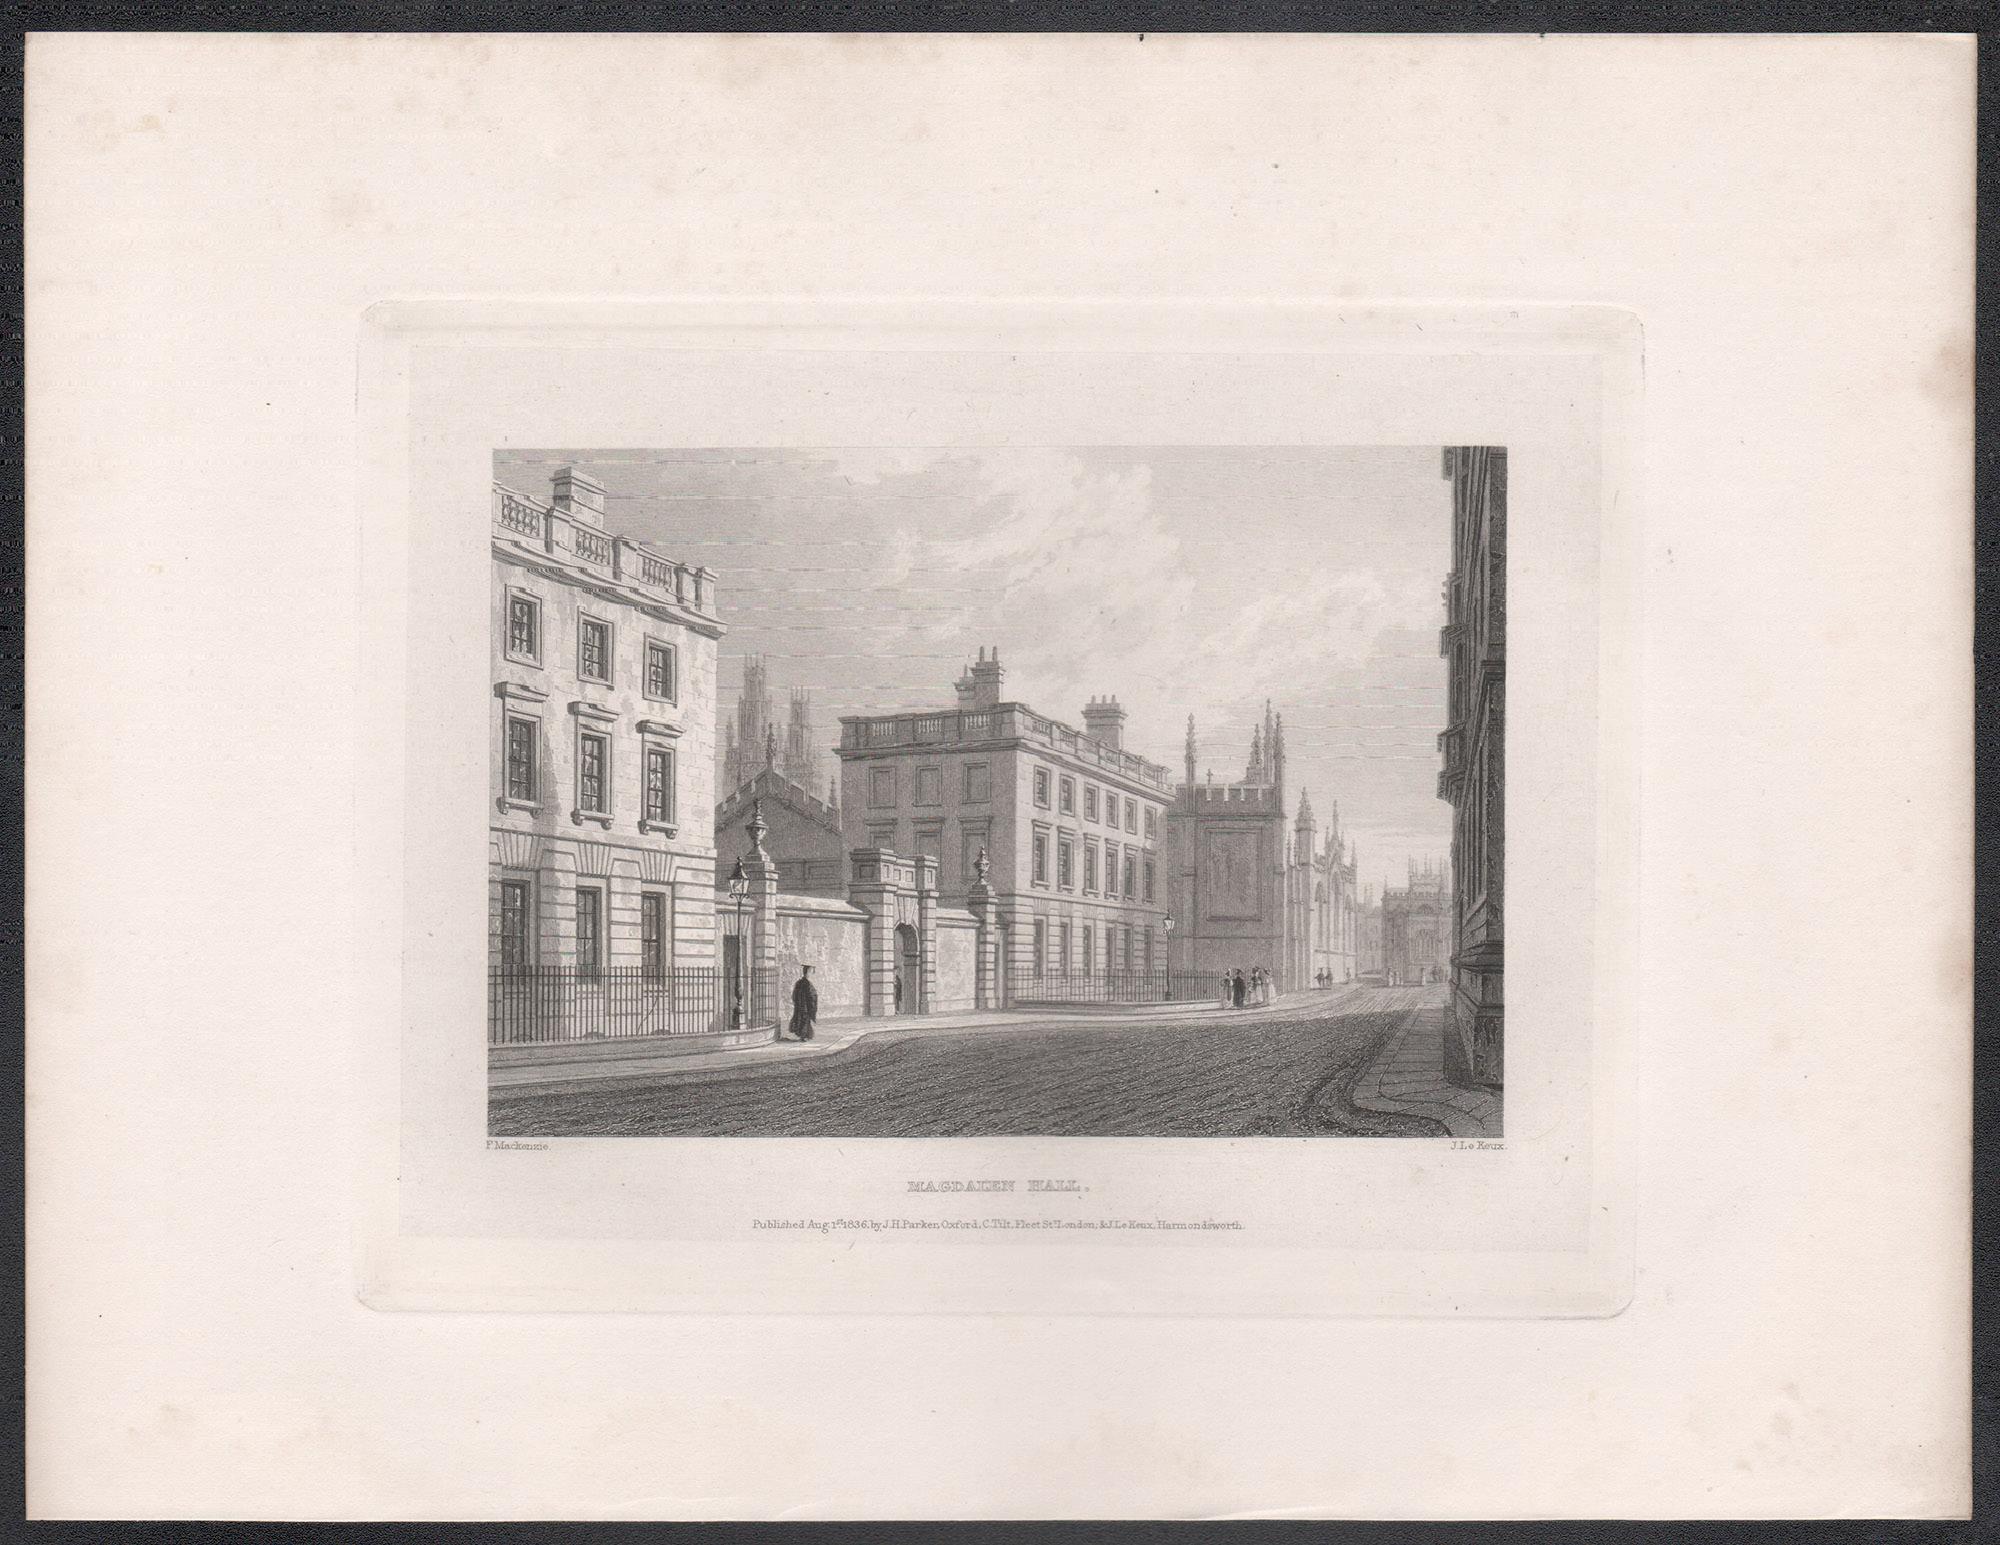 Magdalen Hall. Oxford University. Antike Gravur aus dem 19. Jahrhundert – Print von John Le Keux after Frederick Mackenzie